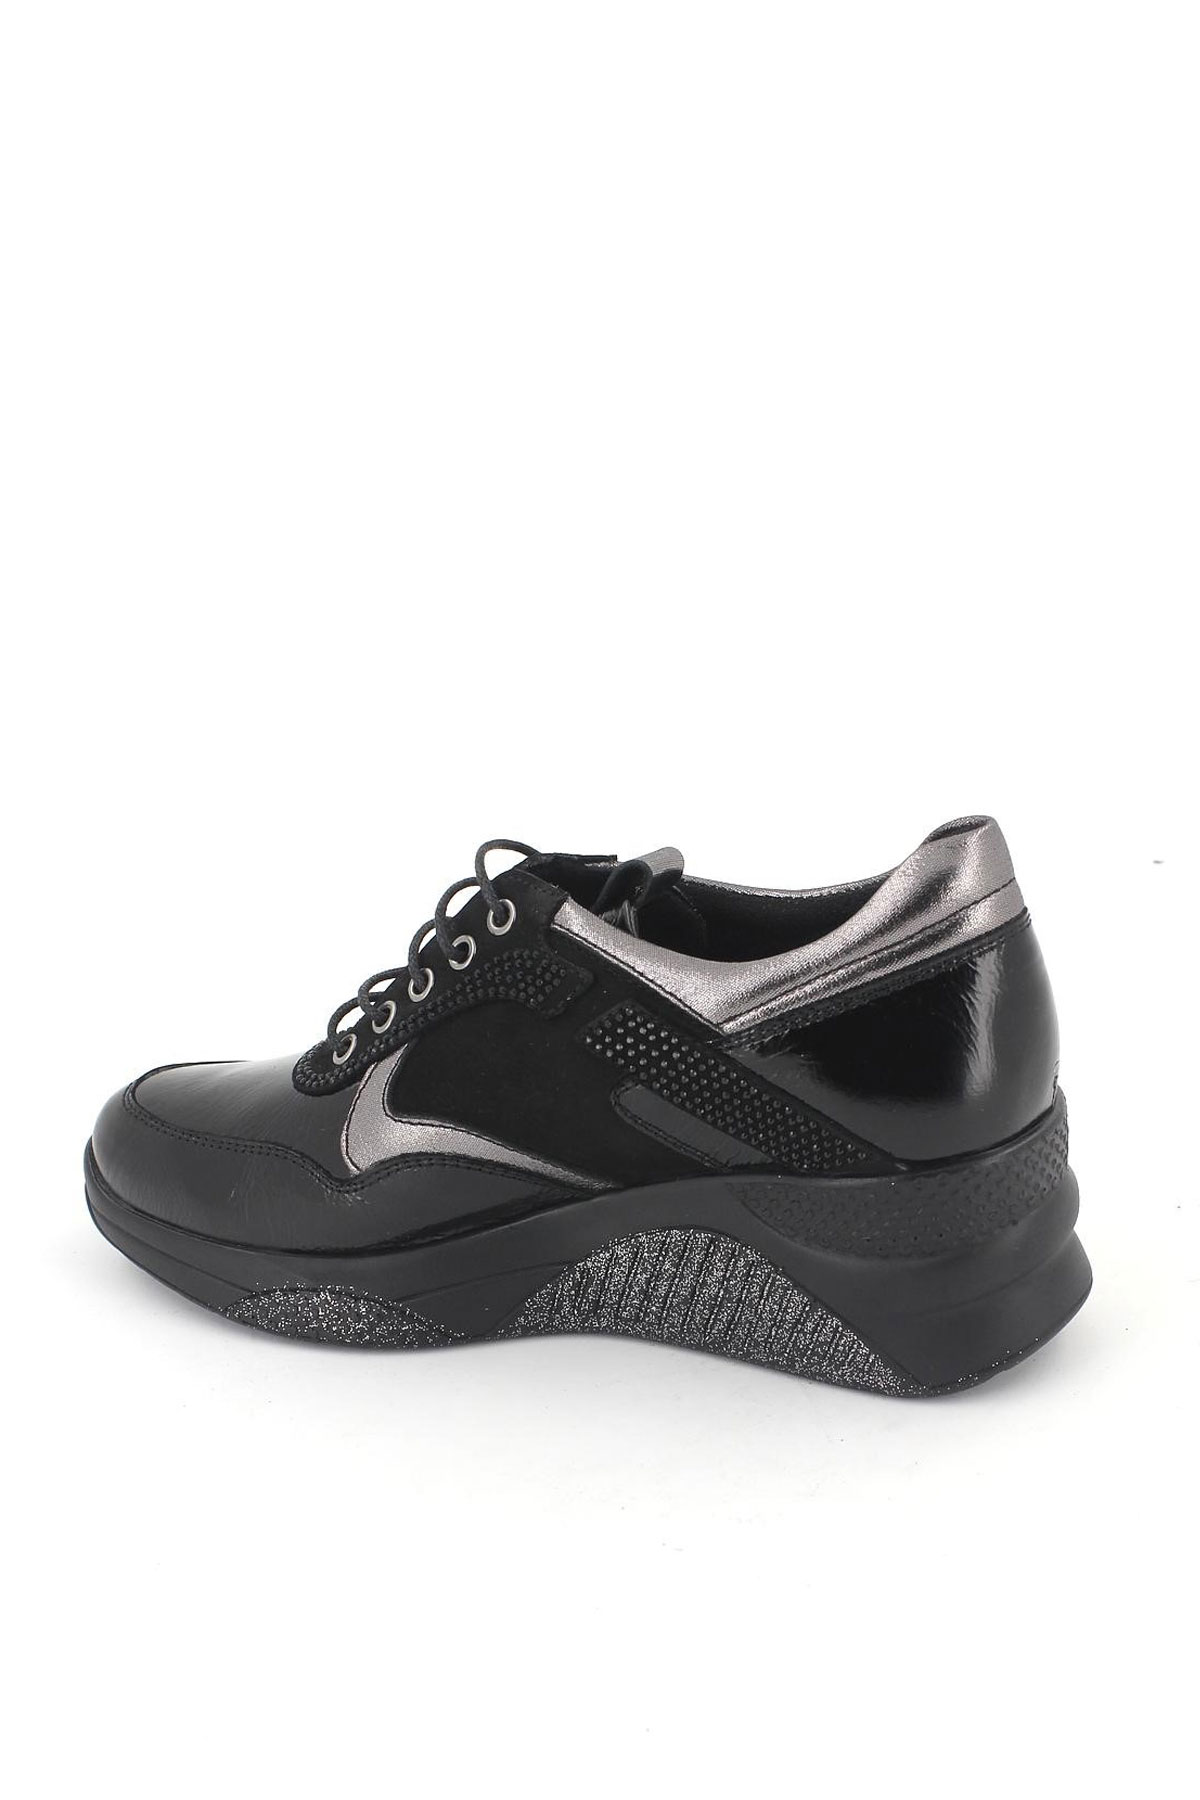 Kadın Extralight Deri Sneakers Siyah 1856070K - Thumbnail